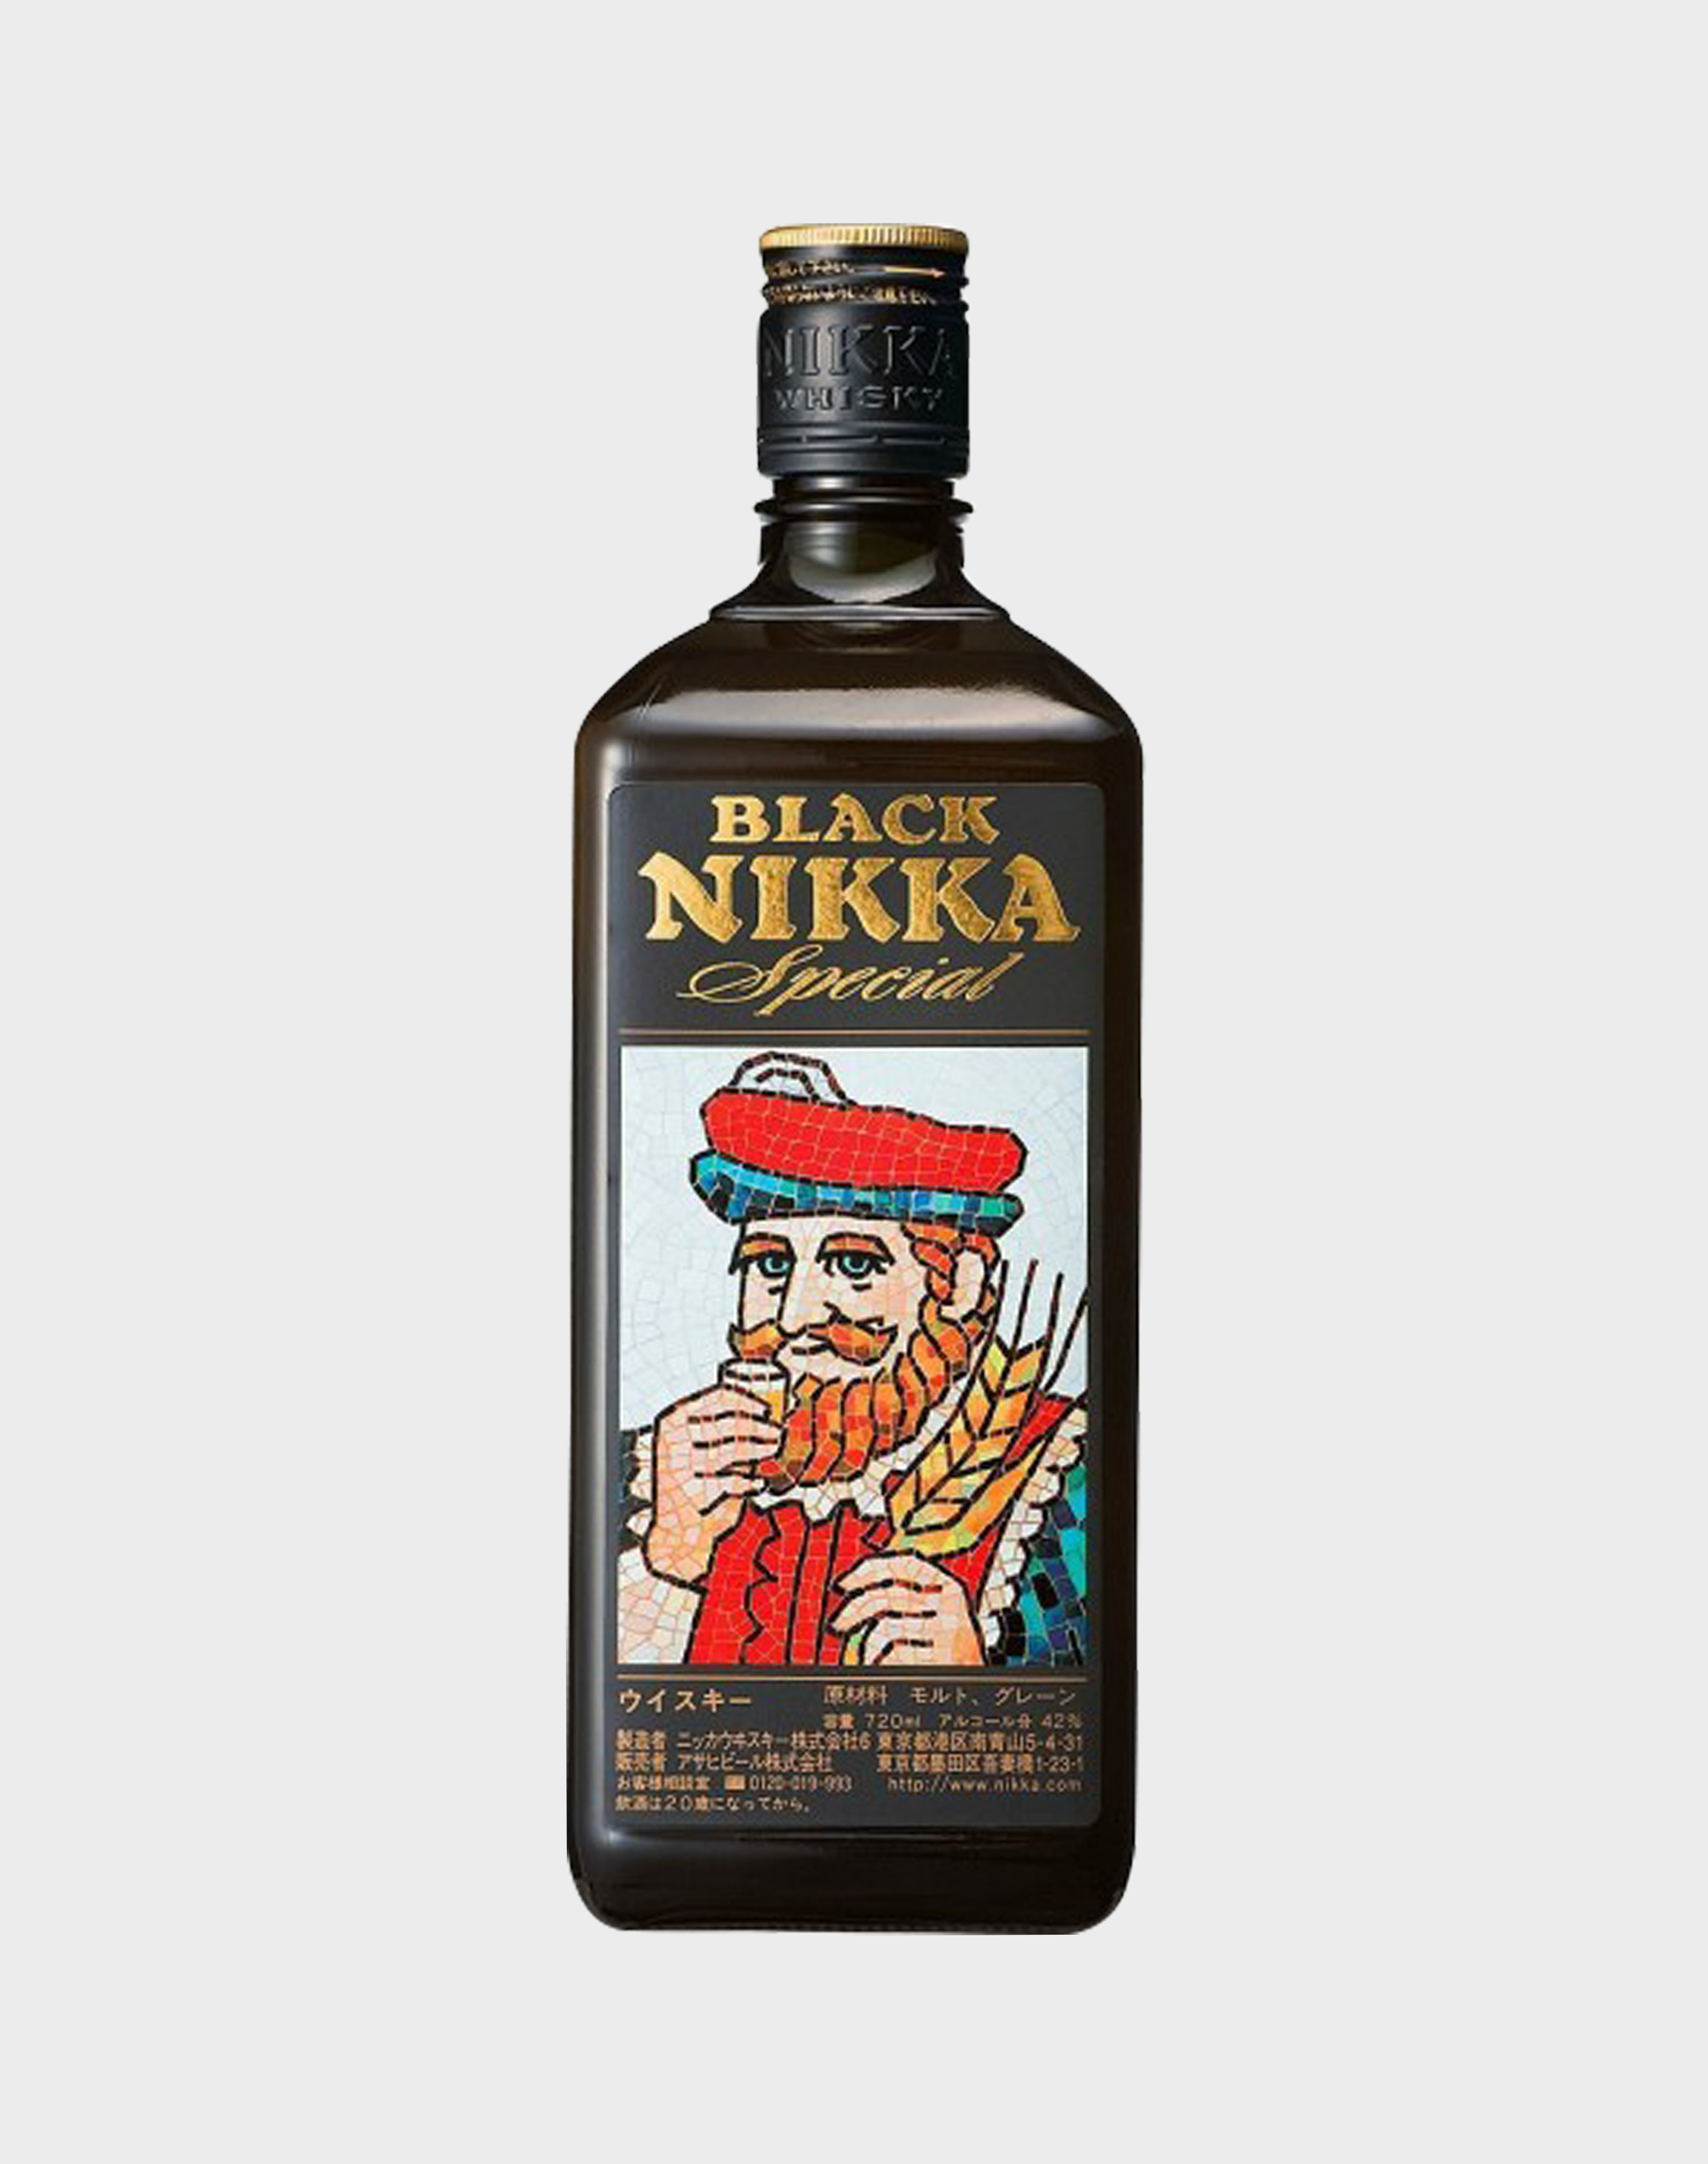 Nikka Black-special Whisky